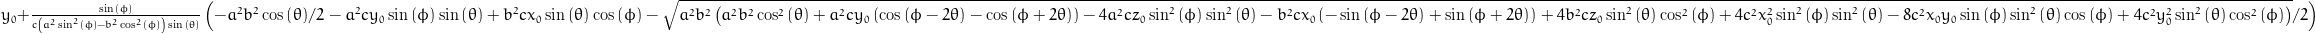 y_{0} + \frac{\sin{\left (\phi \right )}}{c \left(a^{2} \sin^{2}{\left (\phi \right )} - b^{2} \cos^{2}{\left (\phi \right )}\right) \sin{\left (\theta \right )}} \left(- \frac{a^{2} b^{2}}{2} \cos{\left (\theta \right )} - a^{2} c y_{0} \sin{\left (\phi \right )} \sin{\left (\theta \right )} + b^{2} c x_{0} \sin{\left (\theta \right )} \cos{\left (\phi \right )} - \frac{1}{2} \sqrt{a^{2} b^{2} \left(a^{2} b^{2} \cos^{2}{\left (\theta \right )} + a^{2} c y_{0} \left(\cos{\left (\phi - 2 \theta \right )} - \cos{\left (\phi + 2 \theta \right )}\right) - 4 a^{2} c z_{0} \sin^{2}{\left (\phi \right )} \sin^{2}{\left (\theta \right )} - b^{2} c x_{0} \left(- \sin{\left (\phi - 2 \theta \right )} + \sin{\left (\phi + 2 \theta \right )}\right) + 4 b^{2} c z_{0} \sin^{2}{\left (\theta \right )} \cos^{2}{\left (\phi \right )} + 4 c^{2} x_{0}^{2} \sin^{2}{\left (\phi \right )} \sin^{2}{\left (\theta \right )} - 8 c^{2} x_{0} y_{0} \sin{\left (\phi \right )} \sin^{2}{\left (\theta \right )} \cos{\left (\phi \right )} + 4 c^{2} y_{0}^{2} \sin^{2}{\left (\theta \right )} \cos^{2}{\left (\phi \right )}\right)}\right)